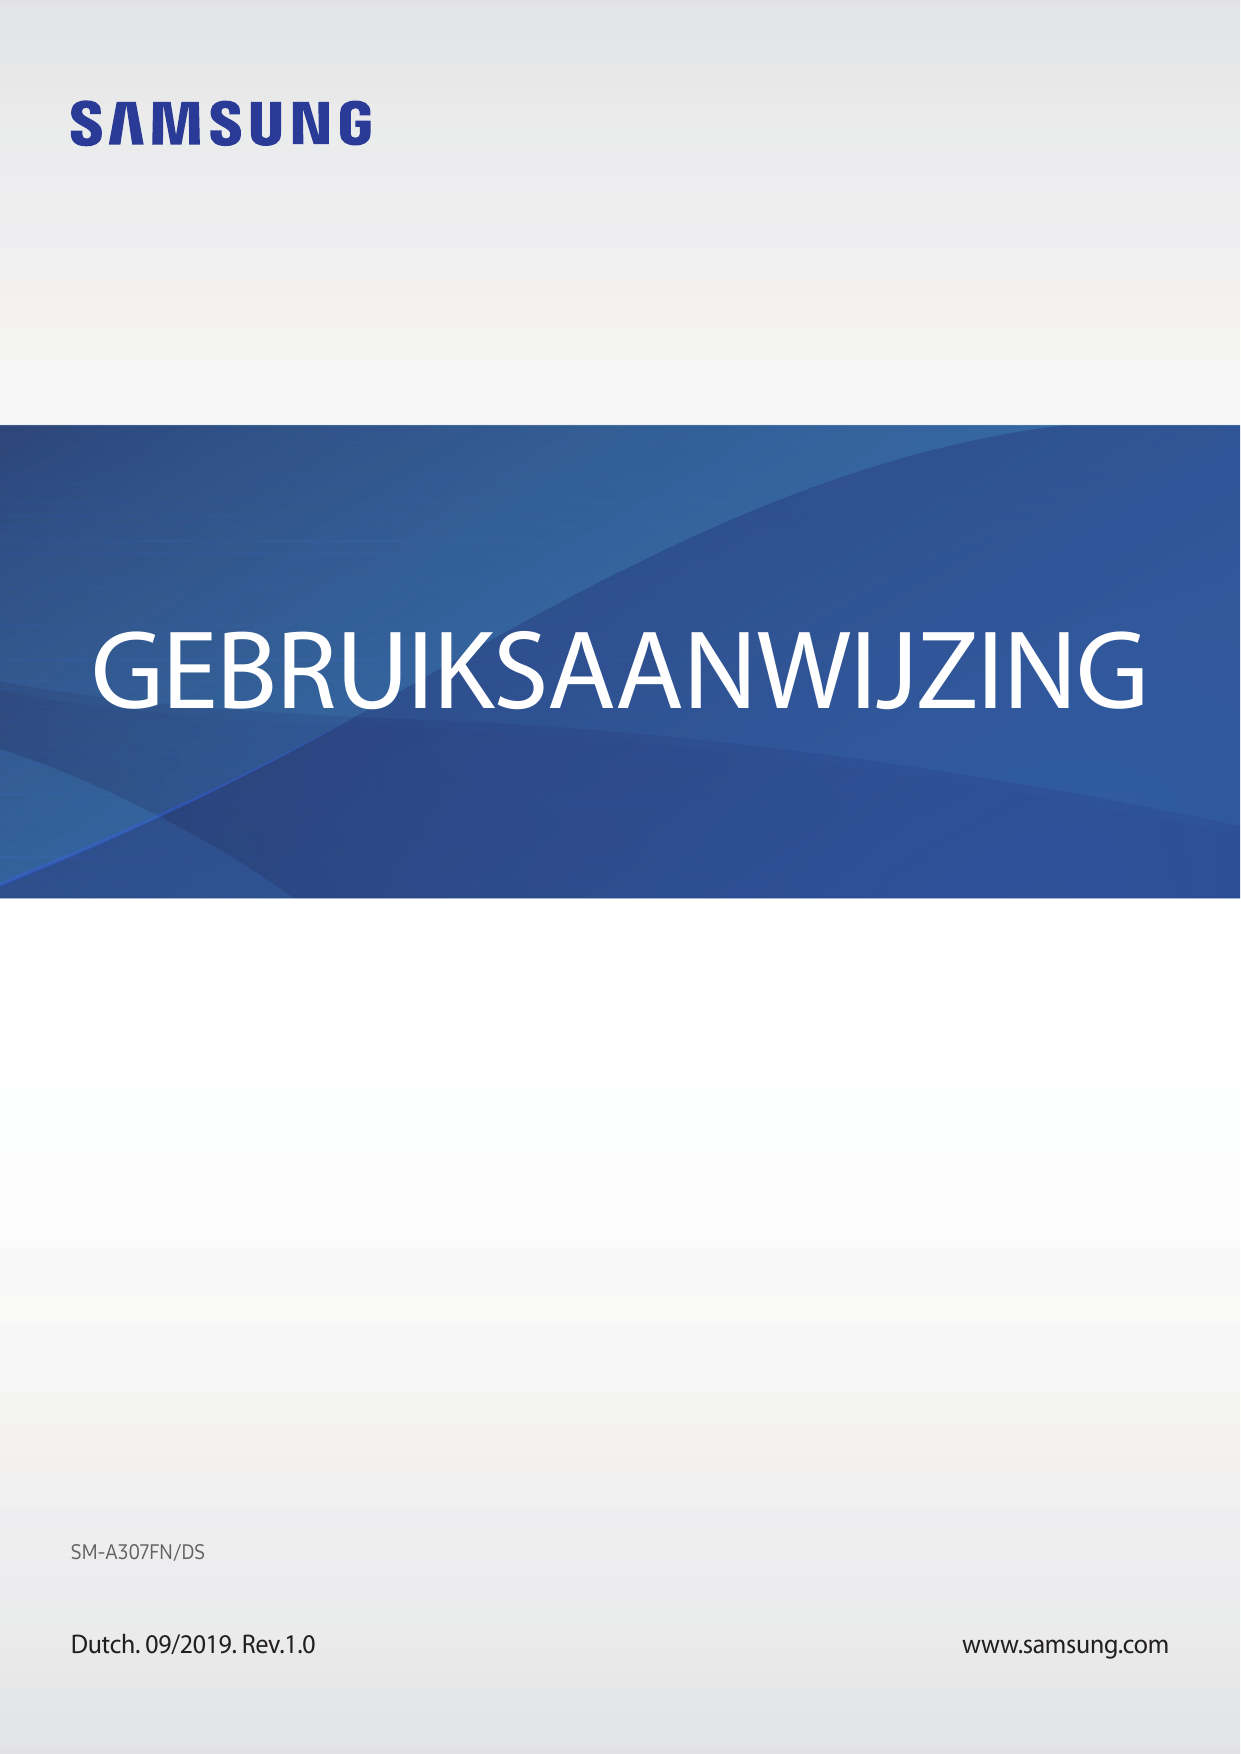 GEBRUIKSAANWIJZINGSM-A307FN/DSDutch. 09/2019. Rev.1.0www.samsung.com